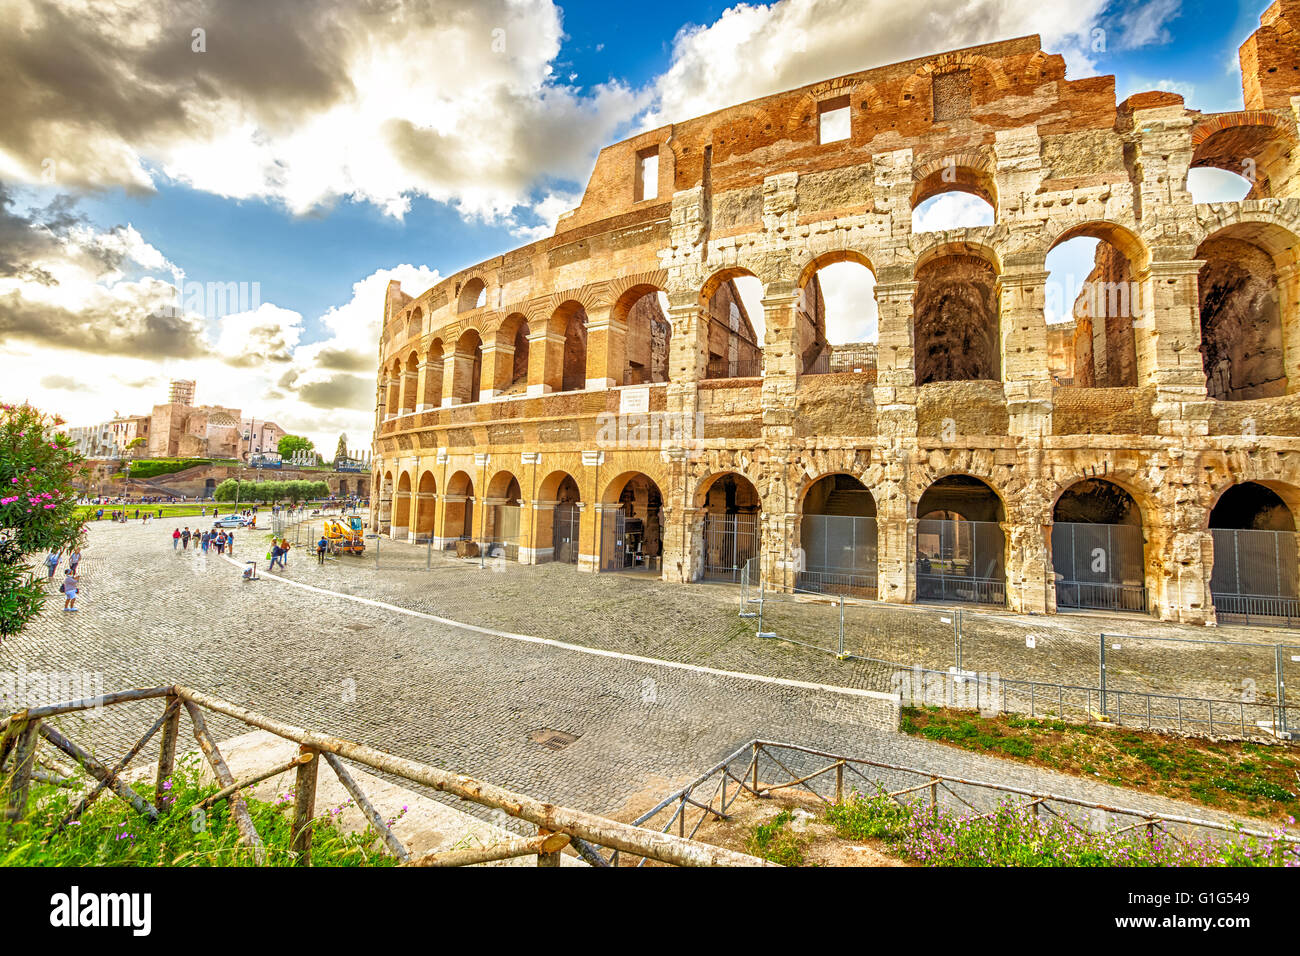 The Colosseum Rome Stock Photo